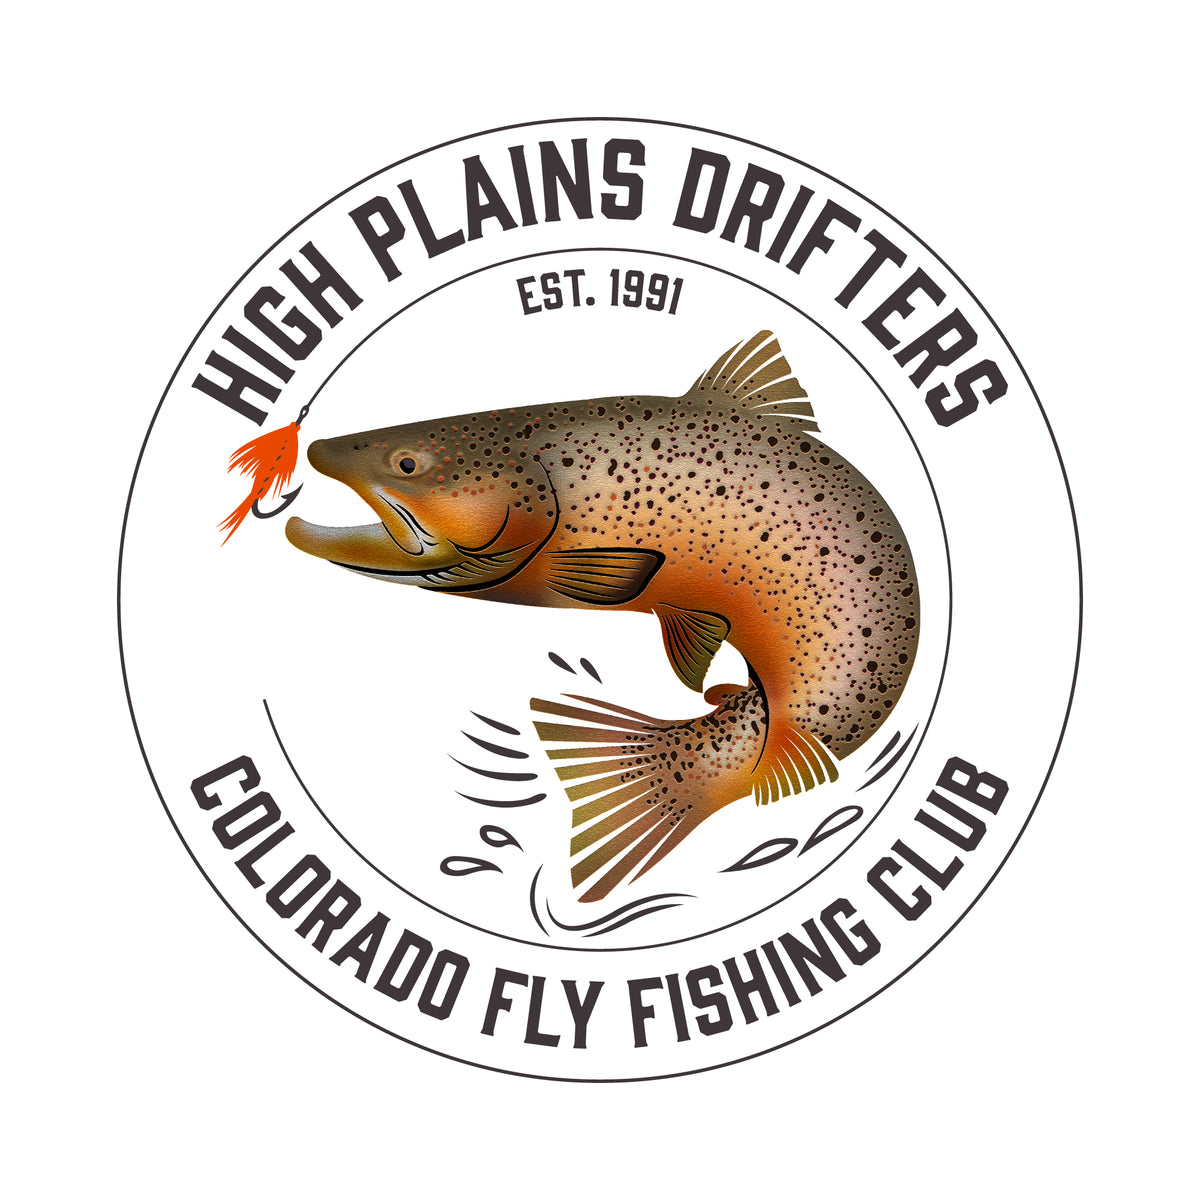 Education – High Plains Drifters Fly Fishing Club